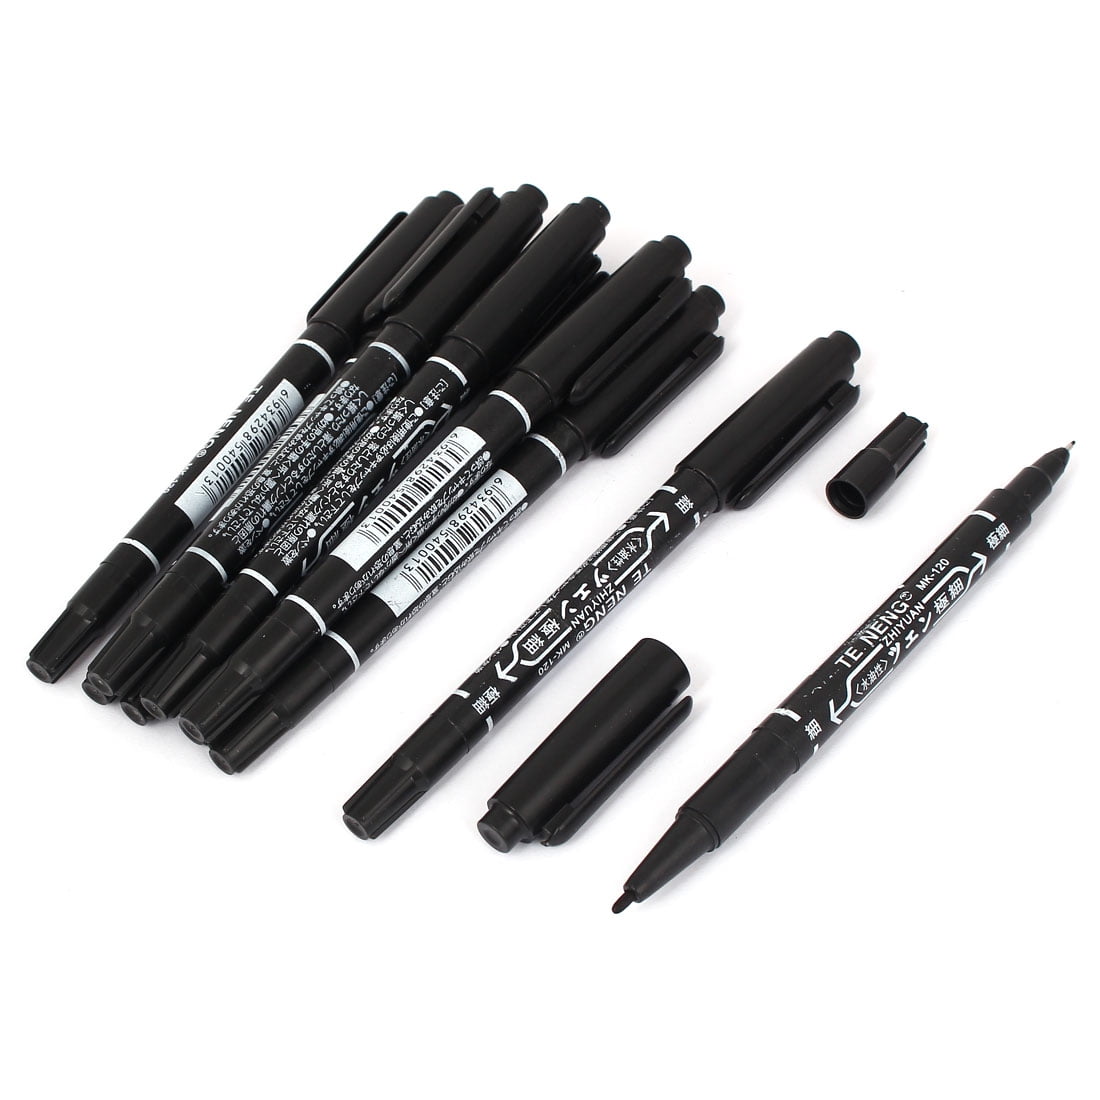 Peekoal Black Permanent Markers, 8 Pack Fine Tip Black Marker Pens,Water  Resistant Marking Pens for Office & School Supplies